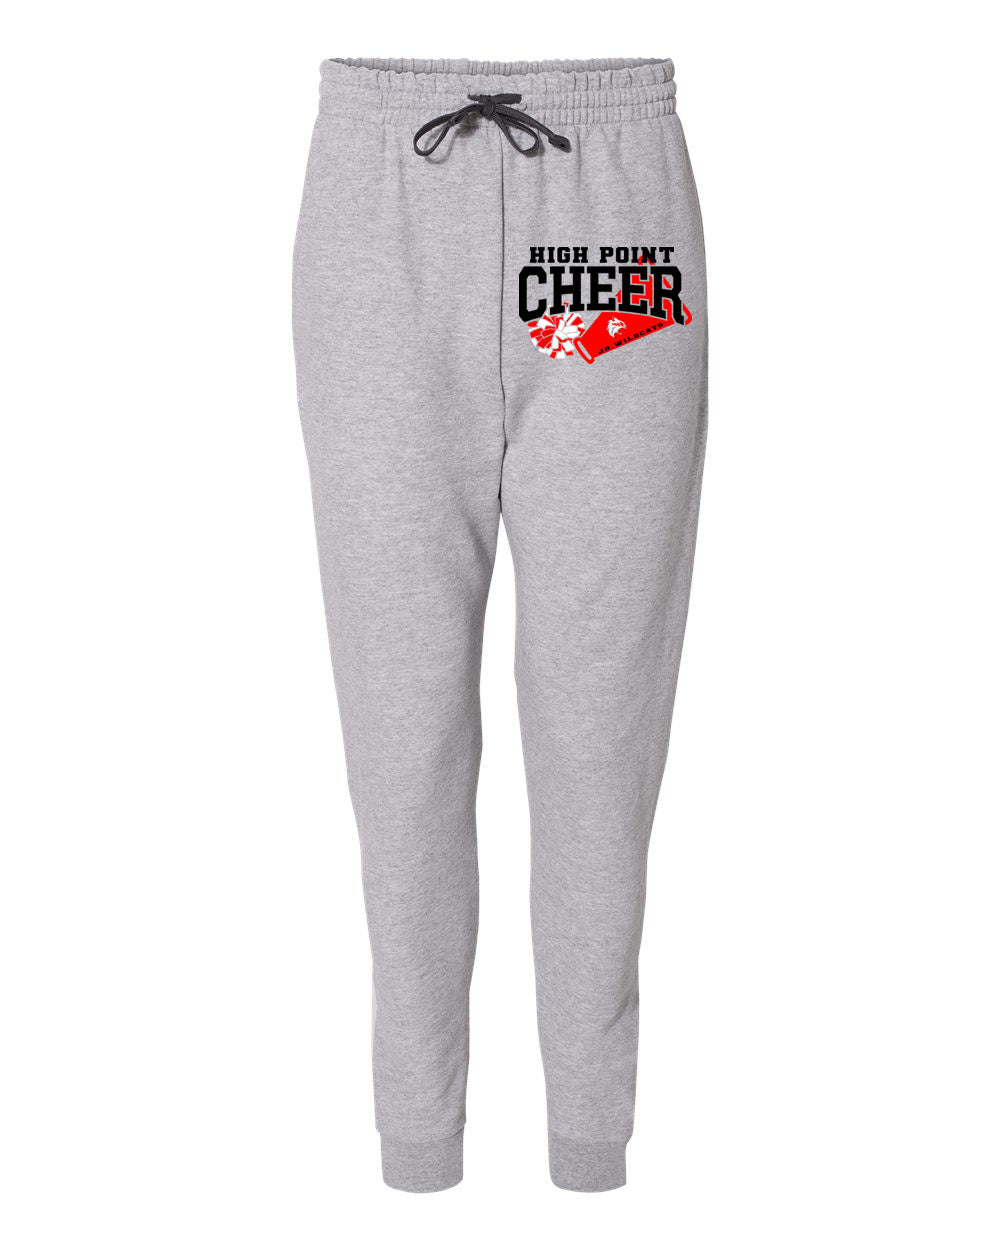 High Point Cheer Design 1 Sweatpants